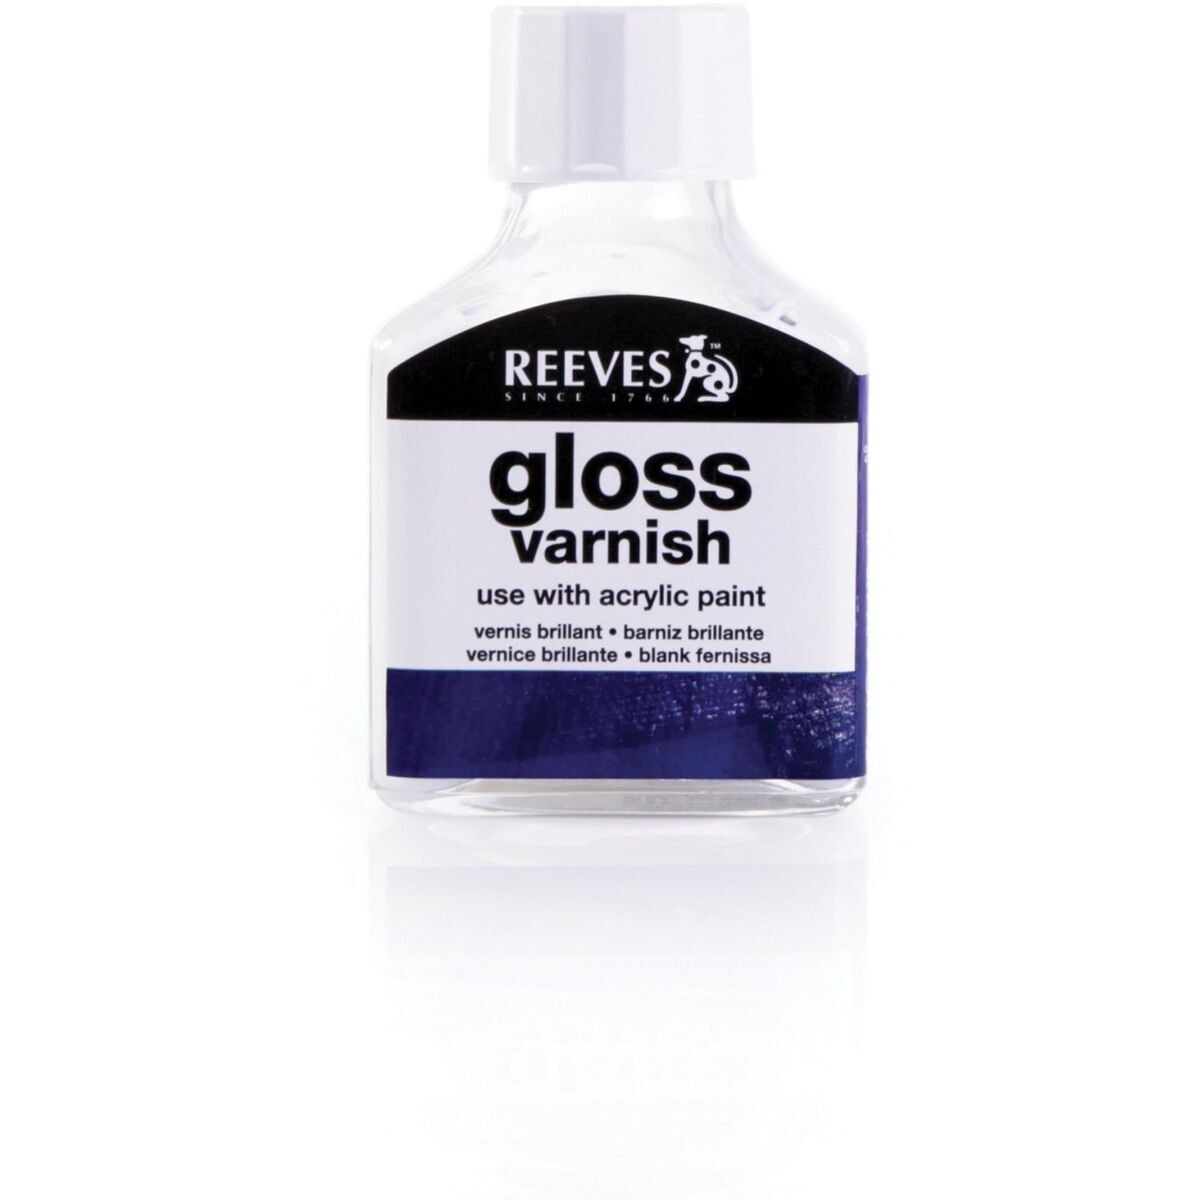 Gloss Varnish